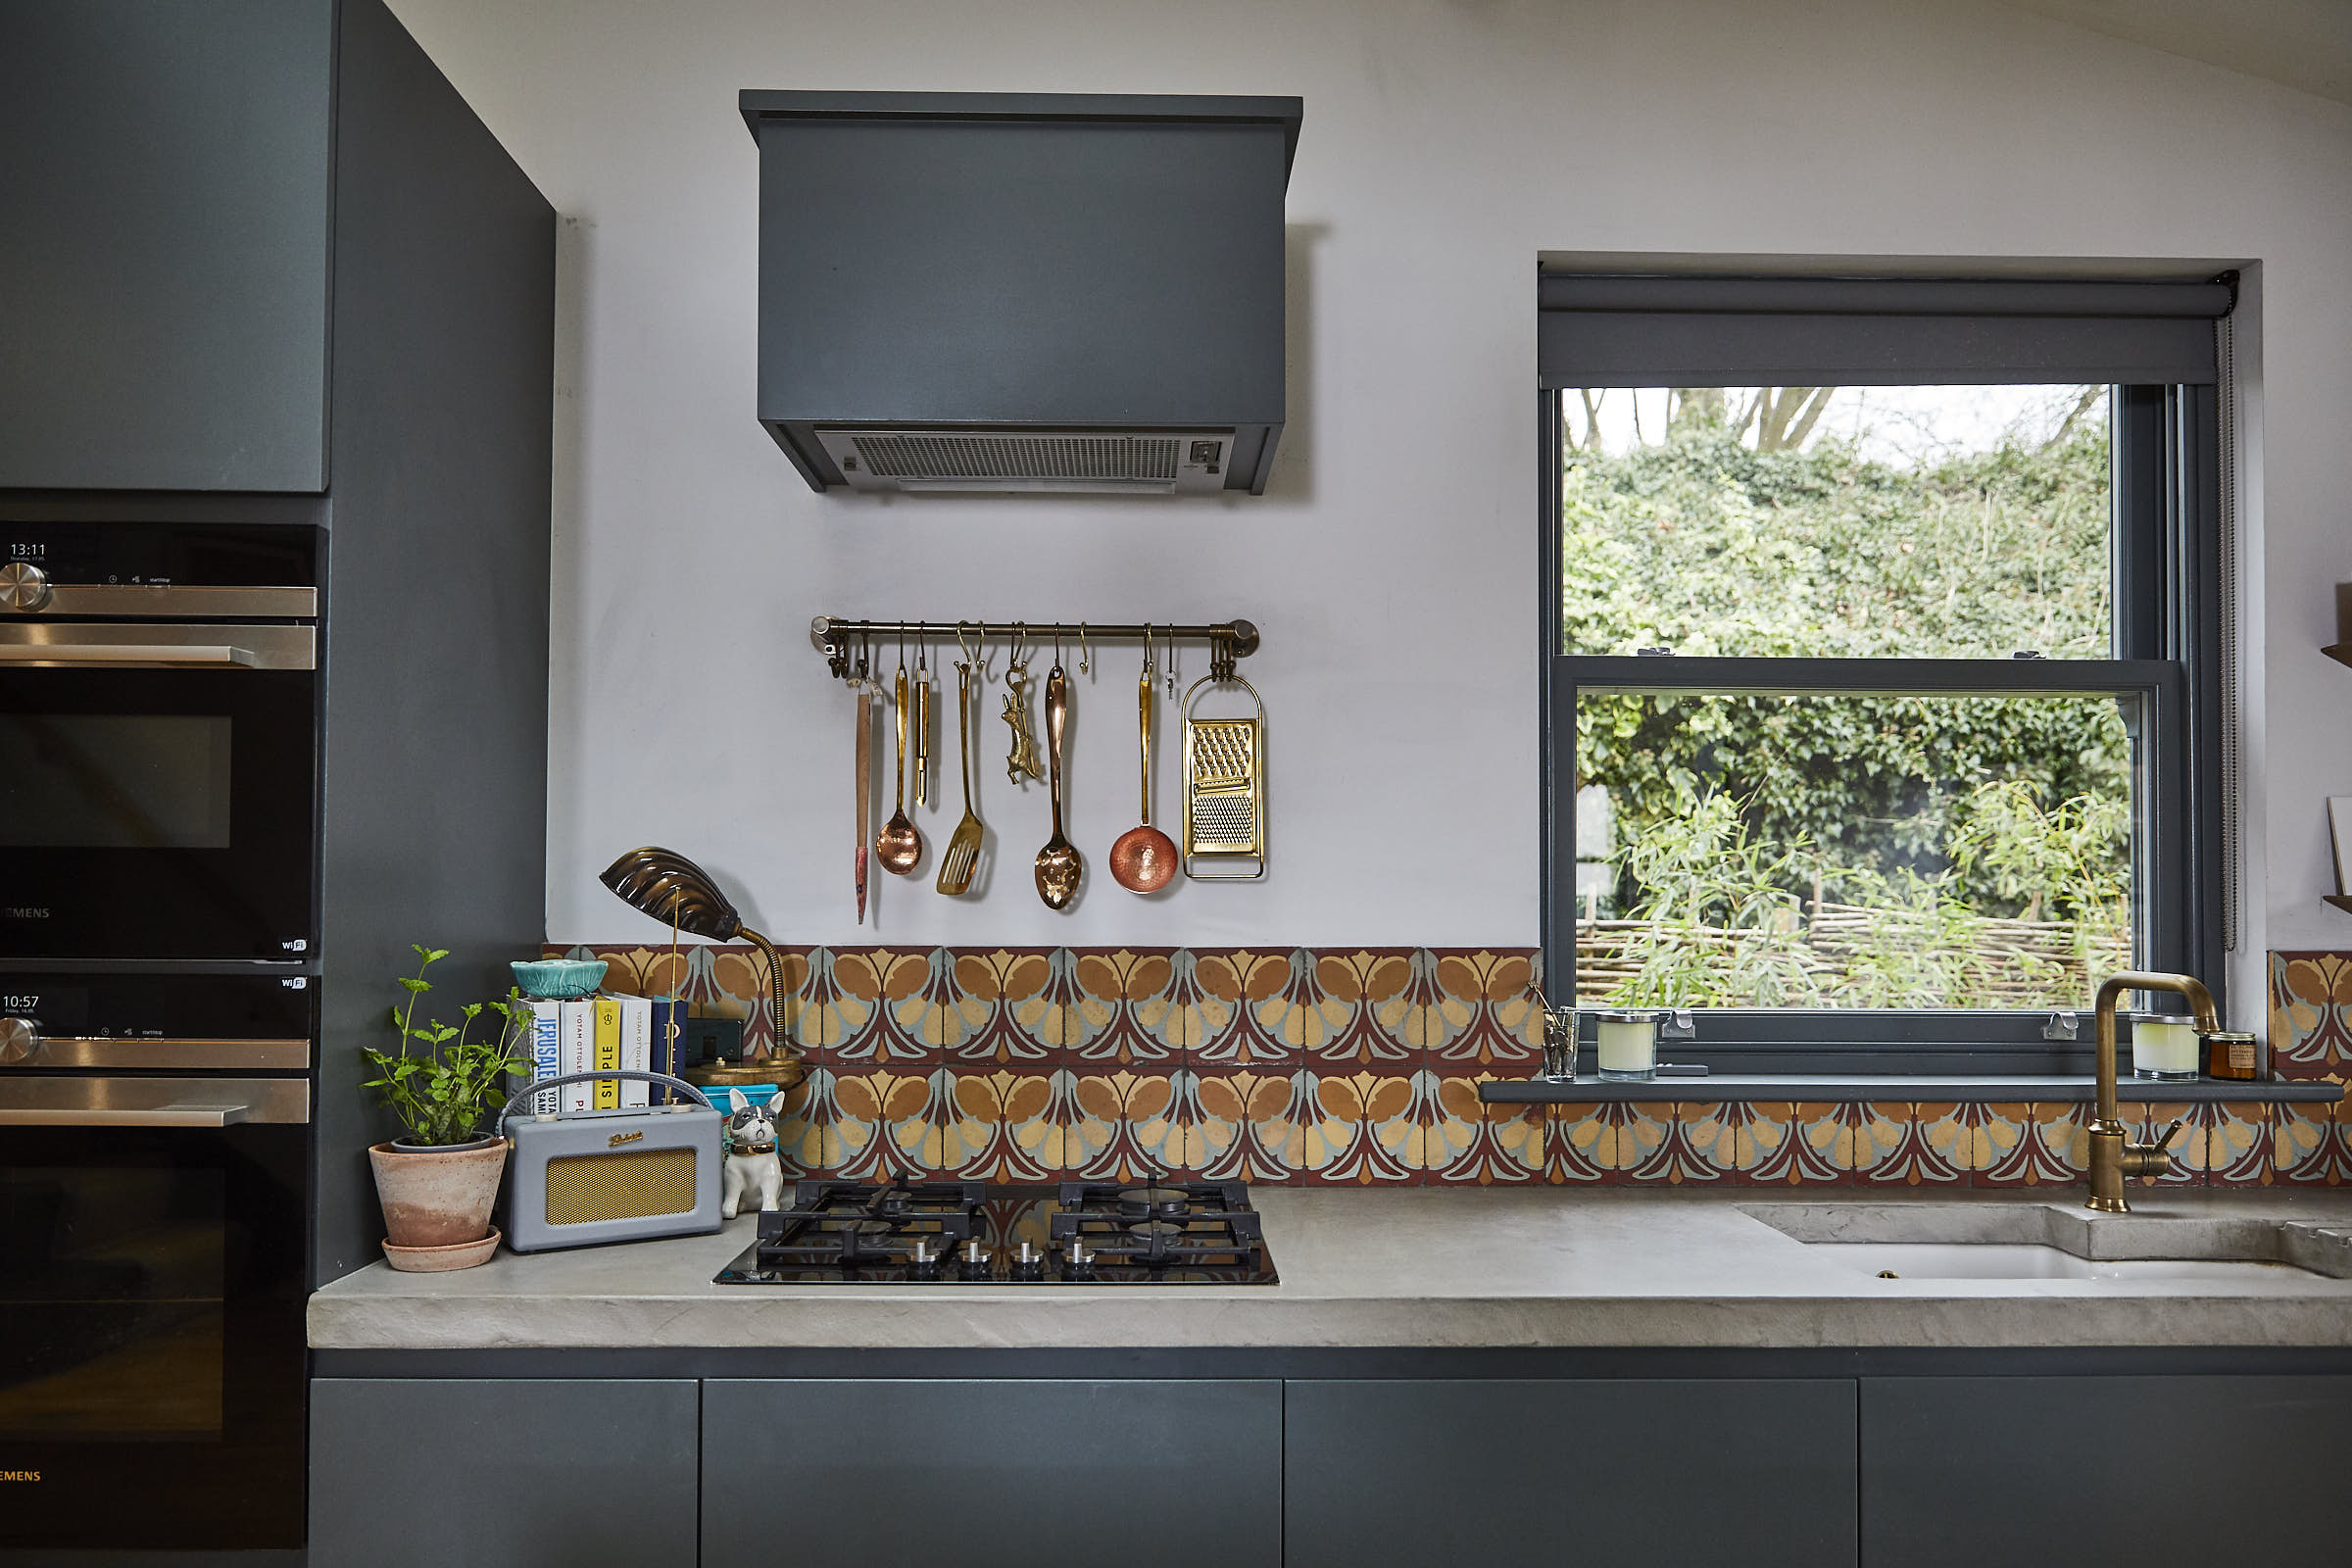 Copper kitchen utensils sit under painted kitchen extractor with tiled backsplash